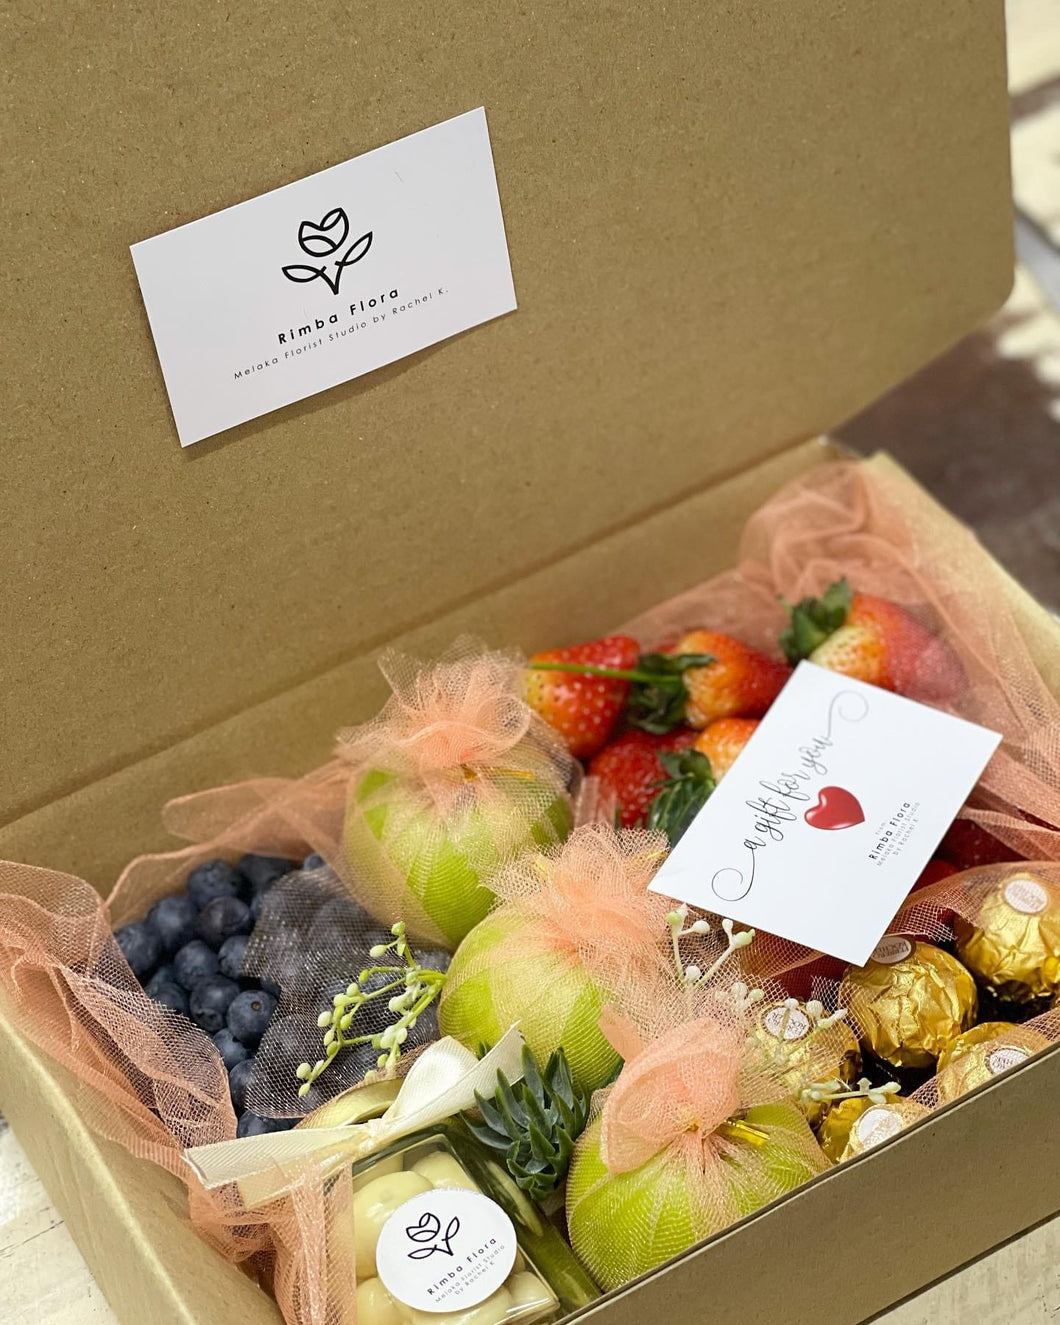 Fruity Chocolates Gift Box To You ( Green Apples, Blueberry, Strawberry, Ferraro Rocher, White Chocolates)